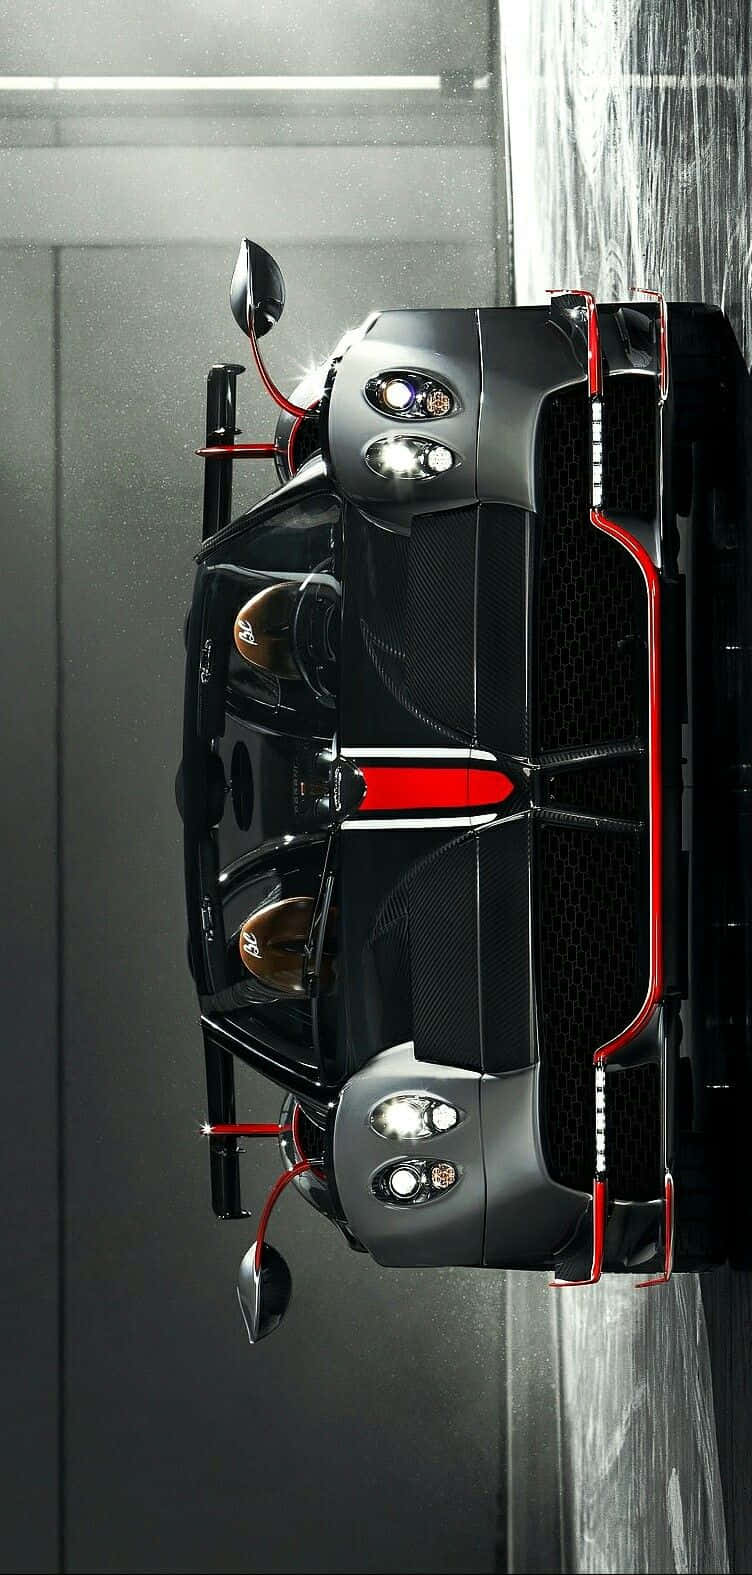 The Exquisite Pagani Zonda C12 Roadster Showcasing Its Powerful, Sleek Design Wallpaper